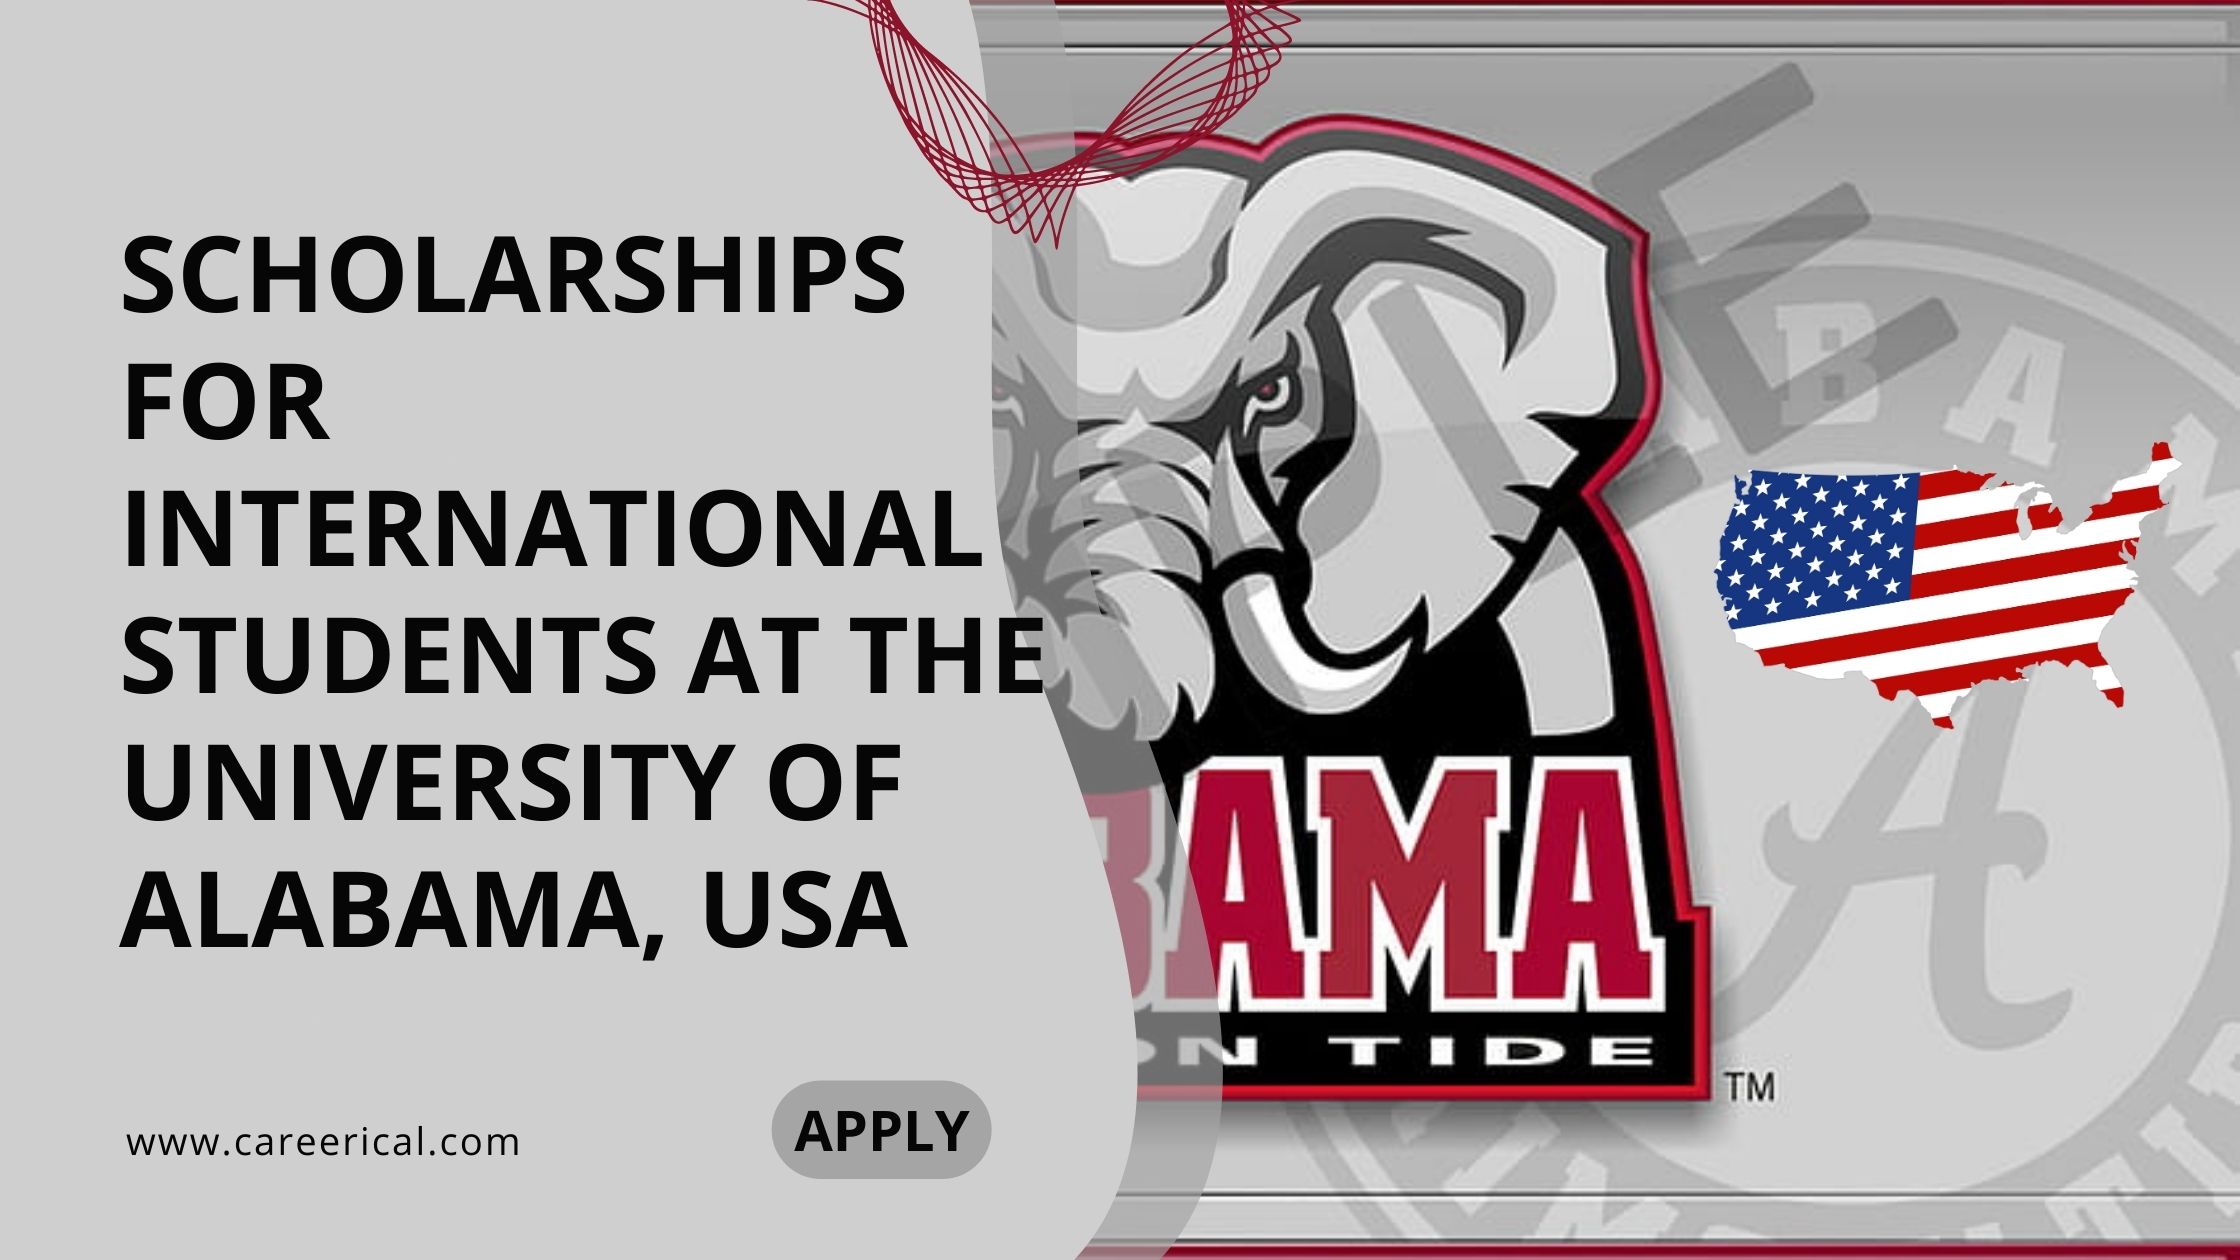 Scholarships for International Students at the University of Alabama, USA